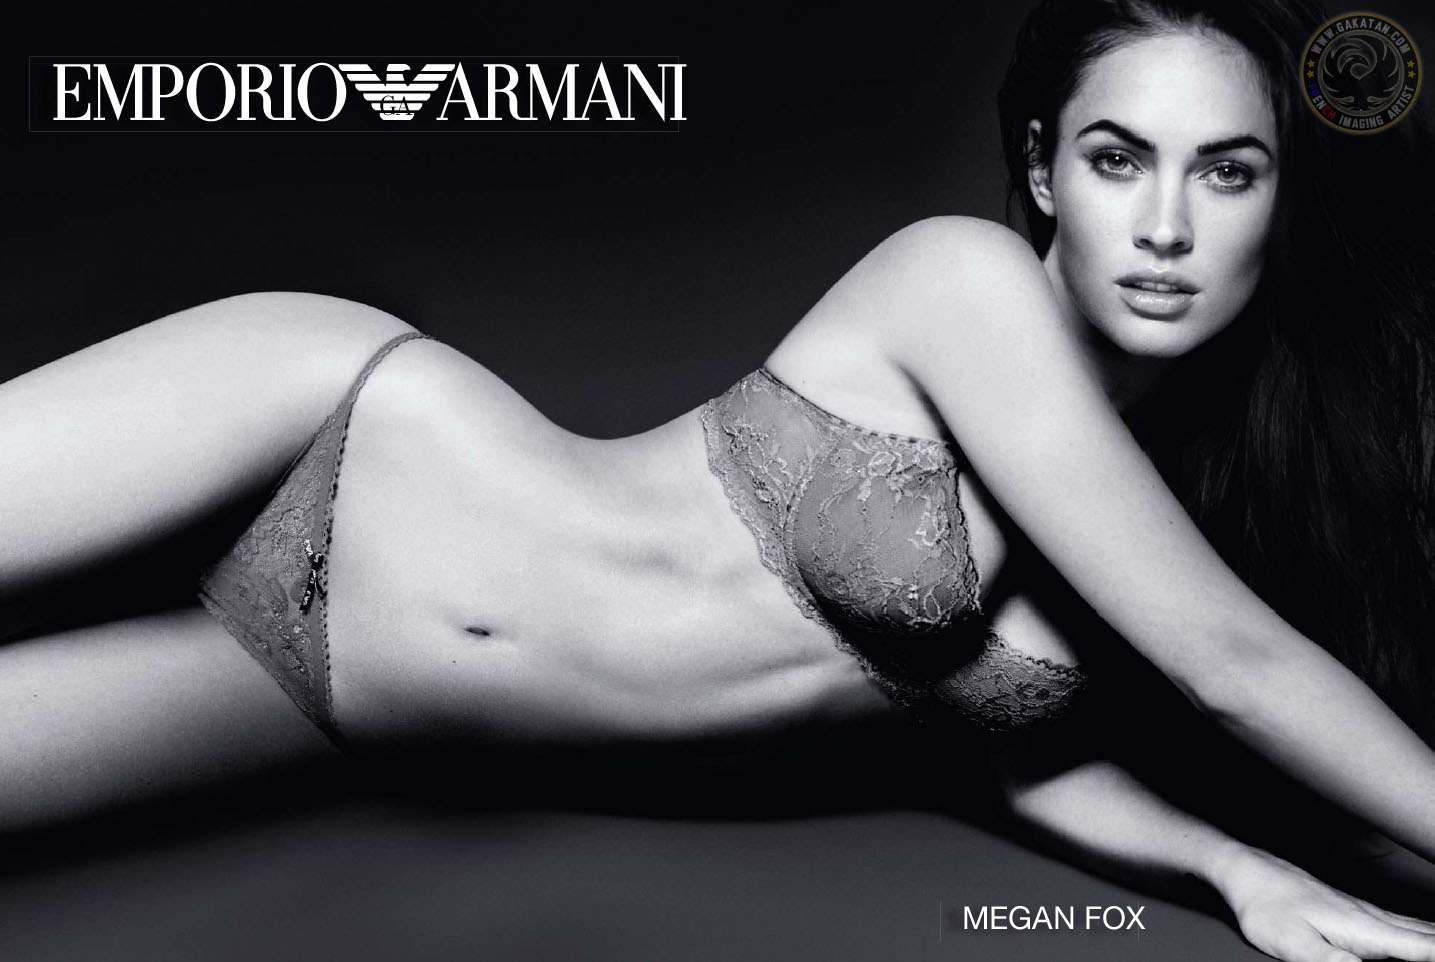 http://1pic1day.com/wp-content/uploads/2010/02/Megan-Fox-Emporio-Armani.jpg